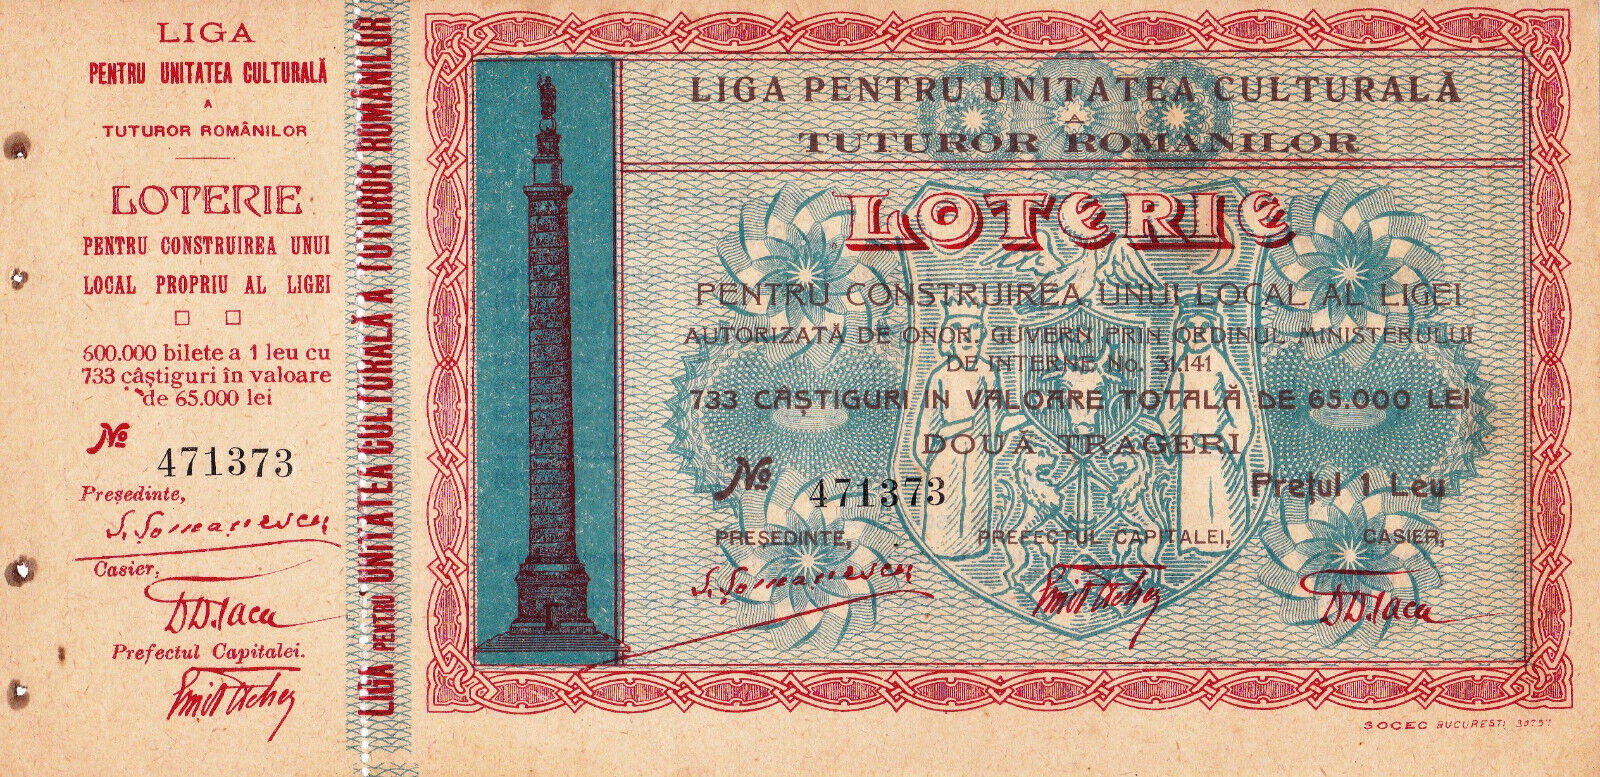 Romania, 1910, Vintage Kingdom Lottery Ticket - Romanians Cultural Unity